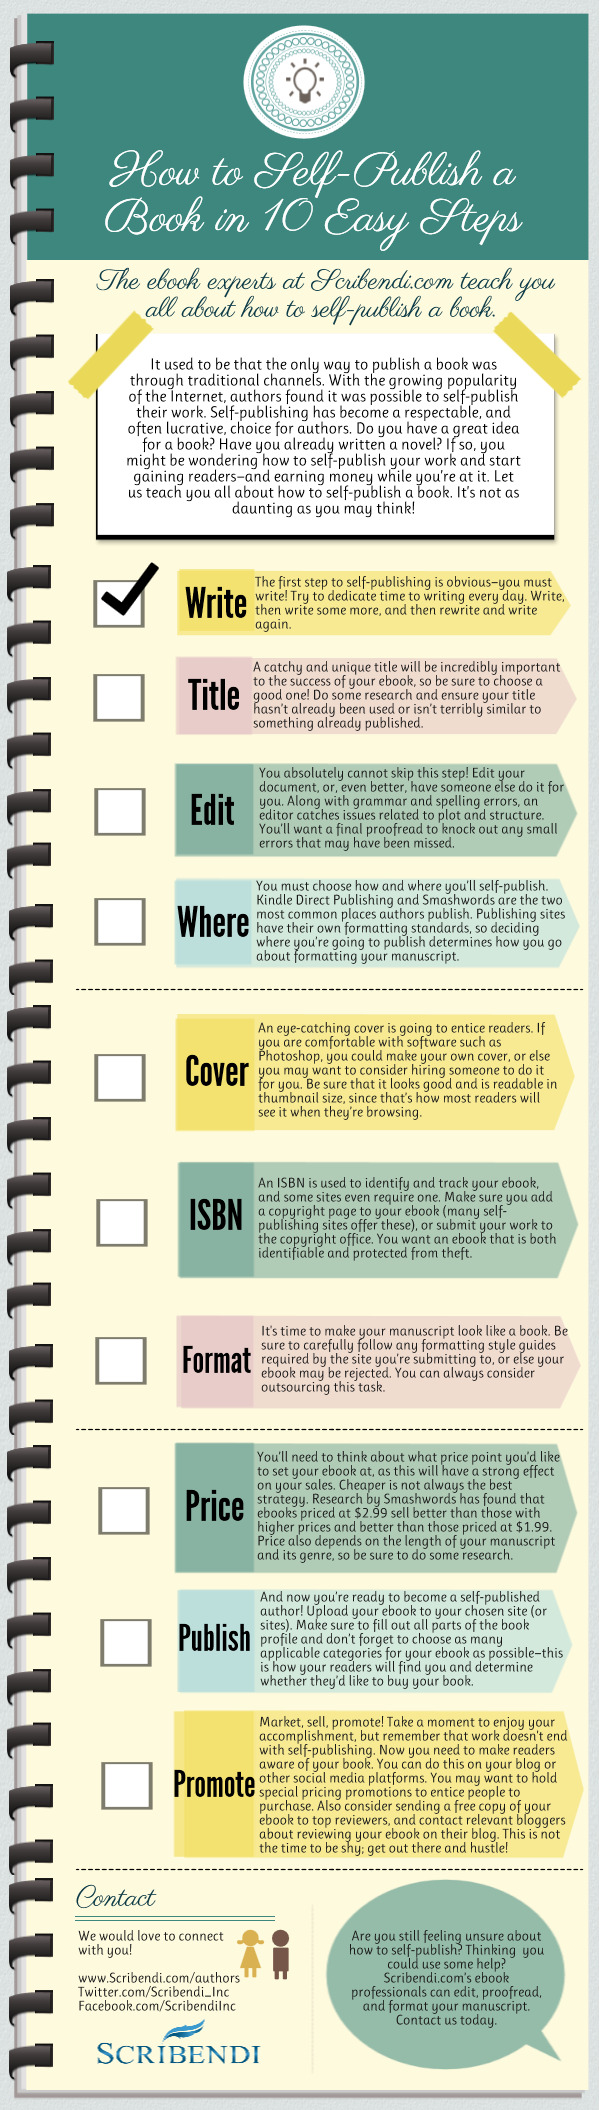 Scribendi.com's self-publishing infographic explains how to self-publish your book.